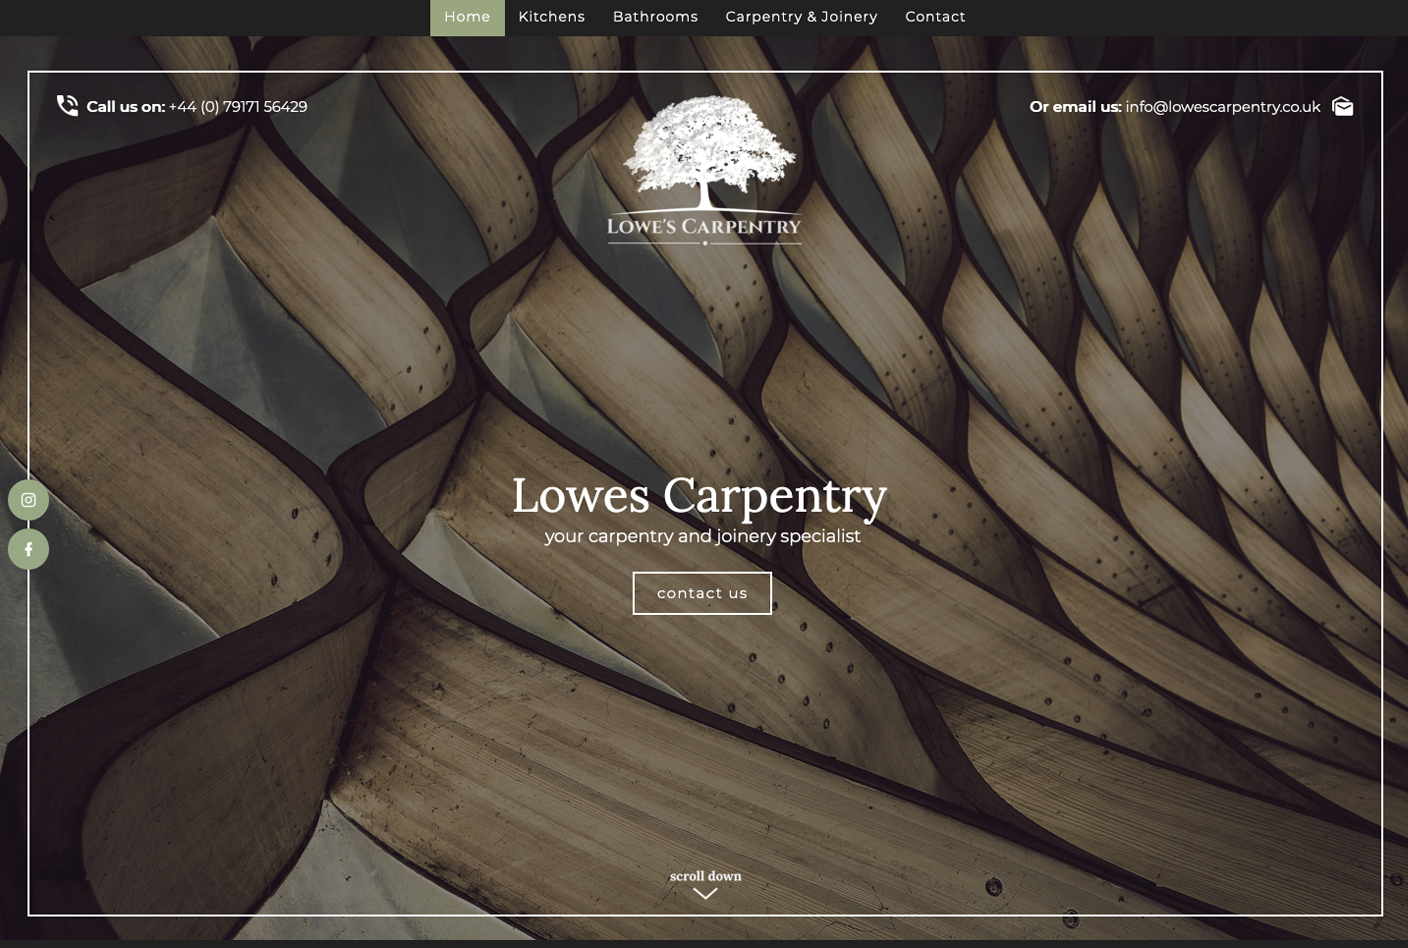 Lowe's Carpentry